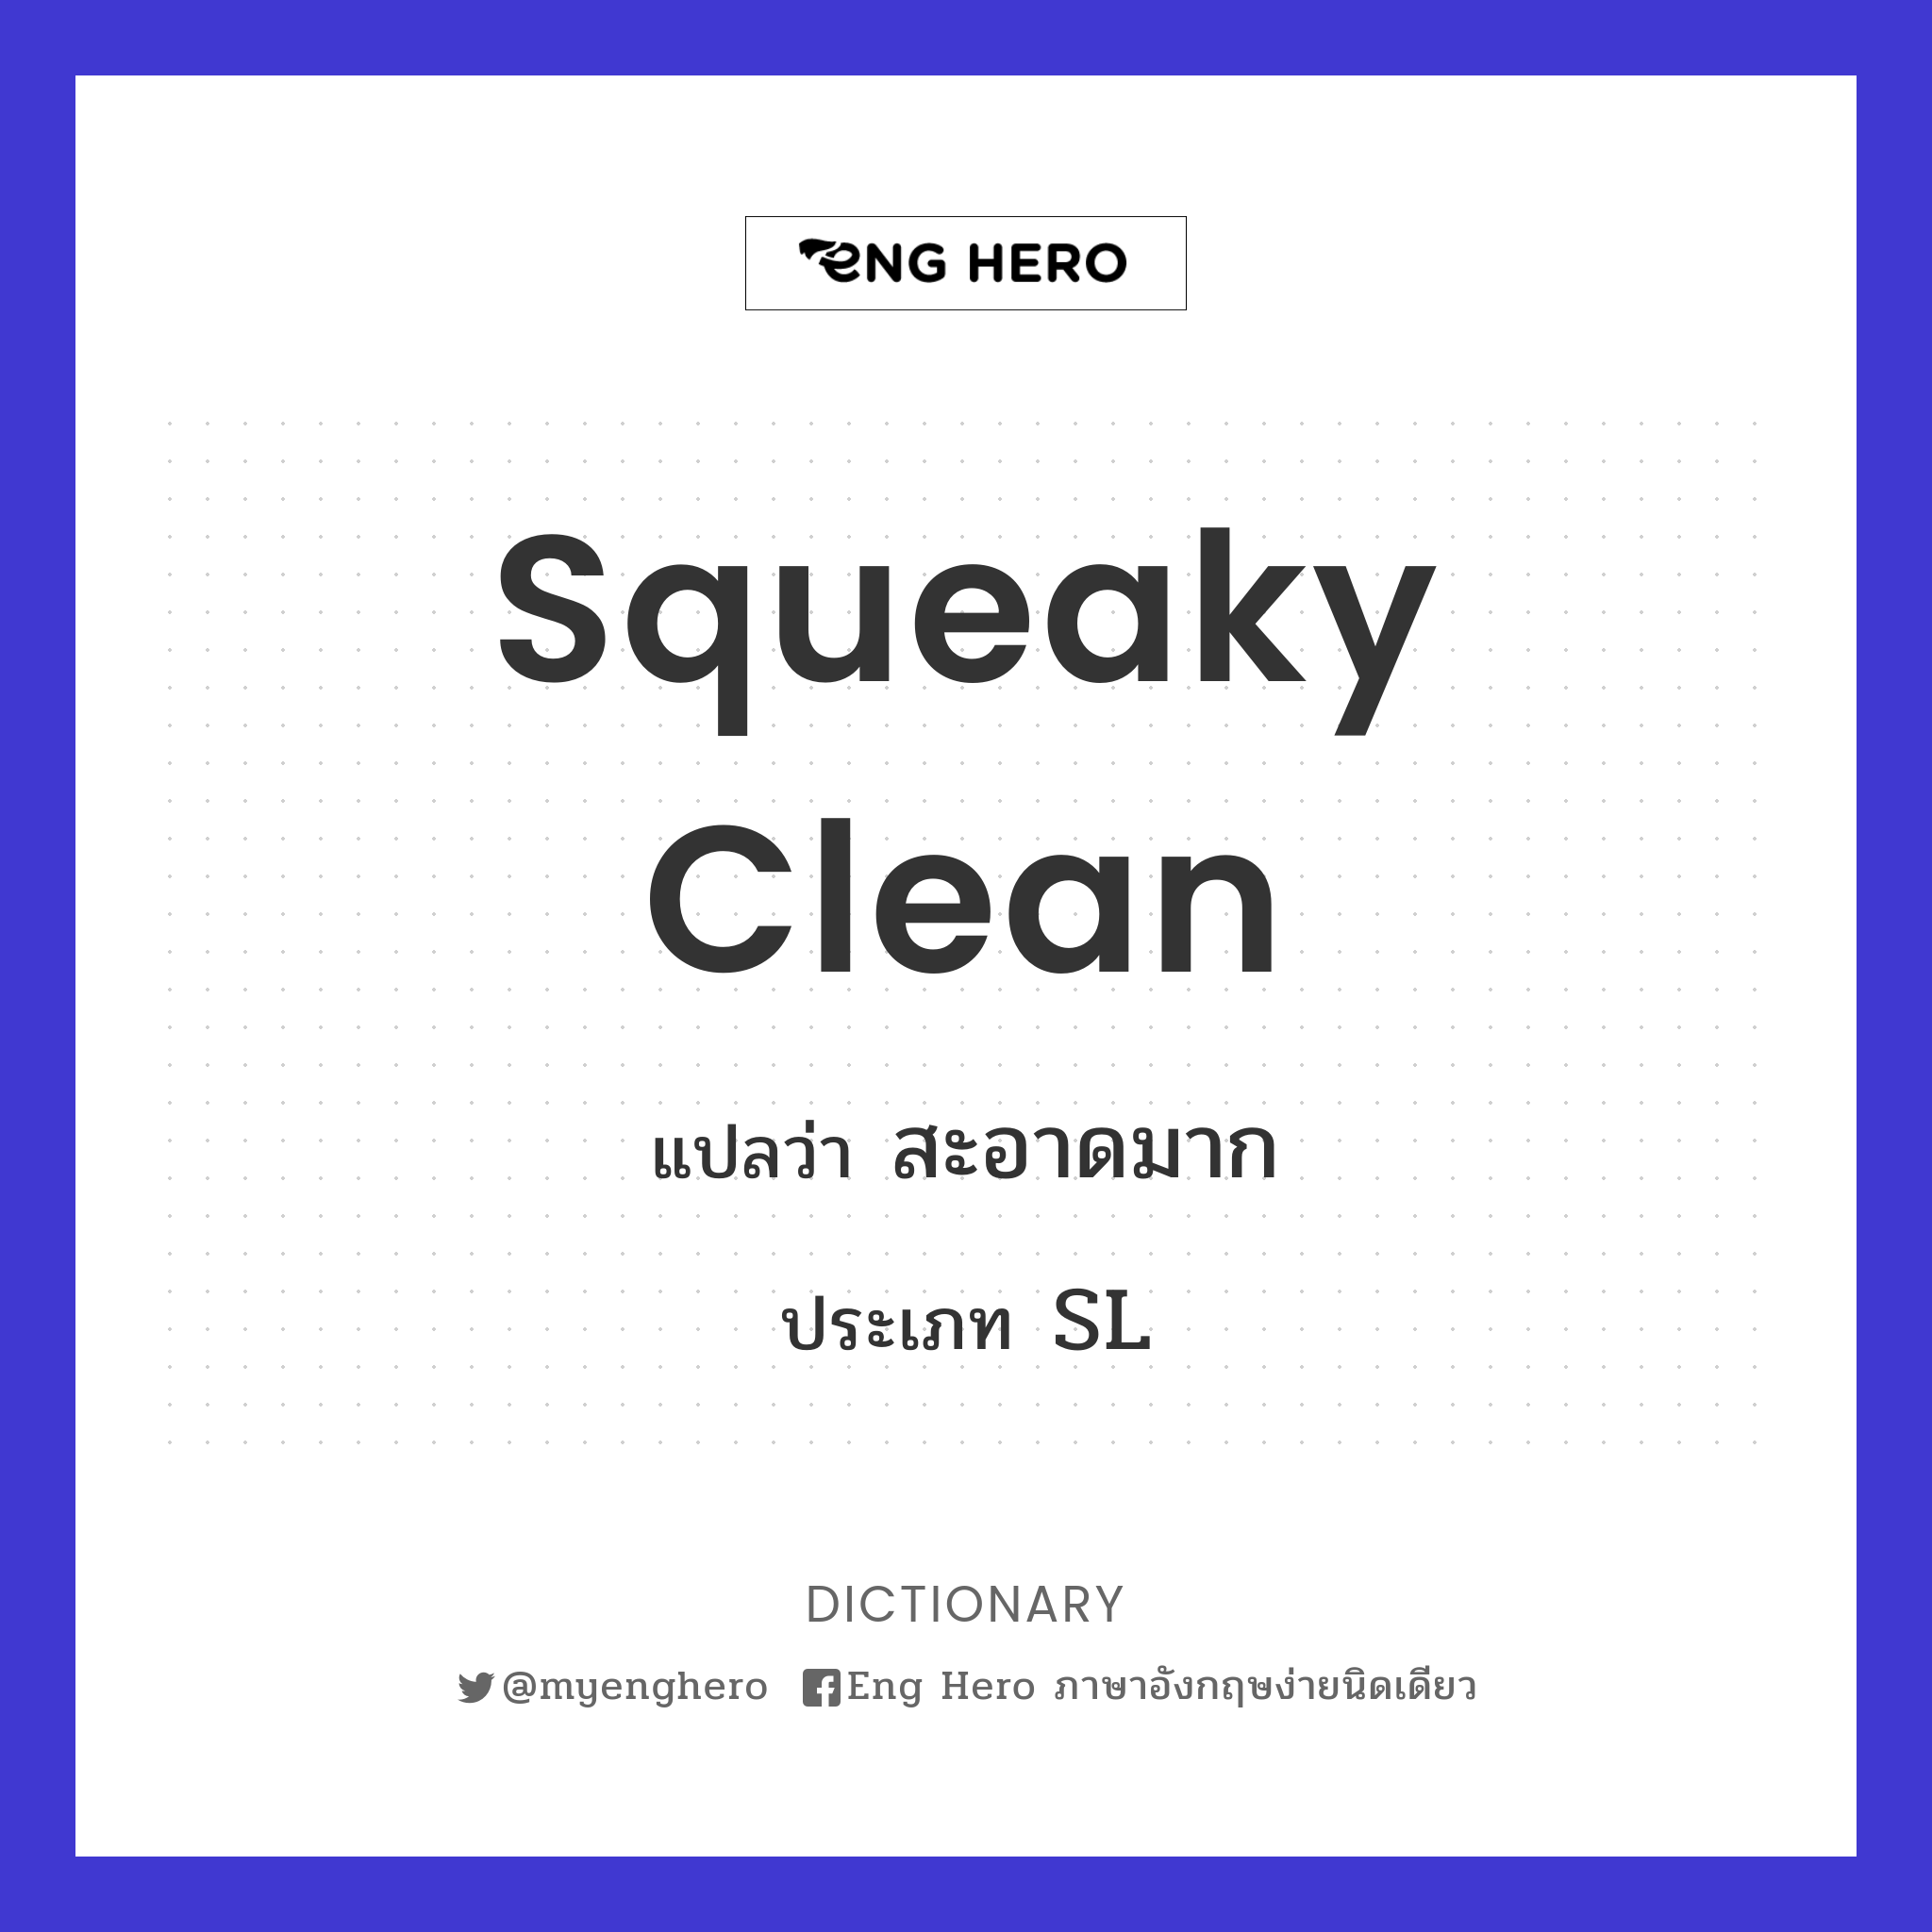 squeaky clean